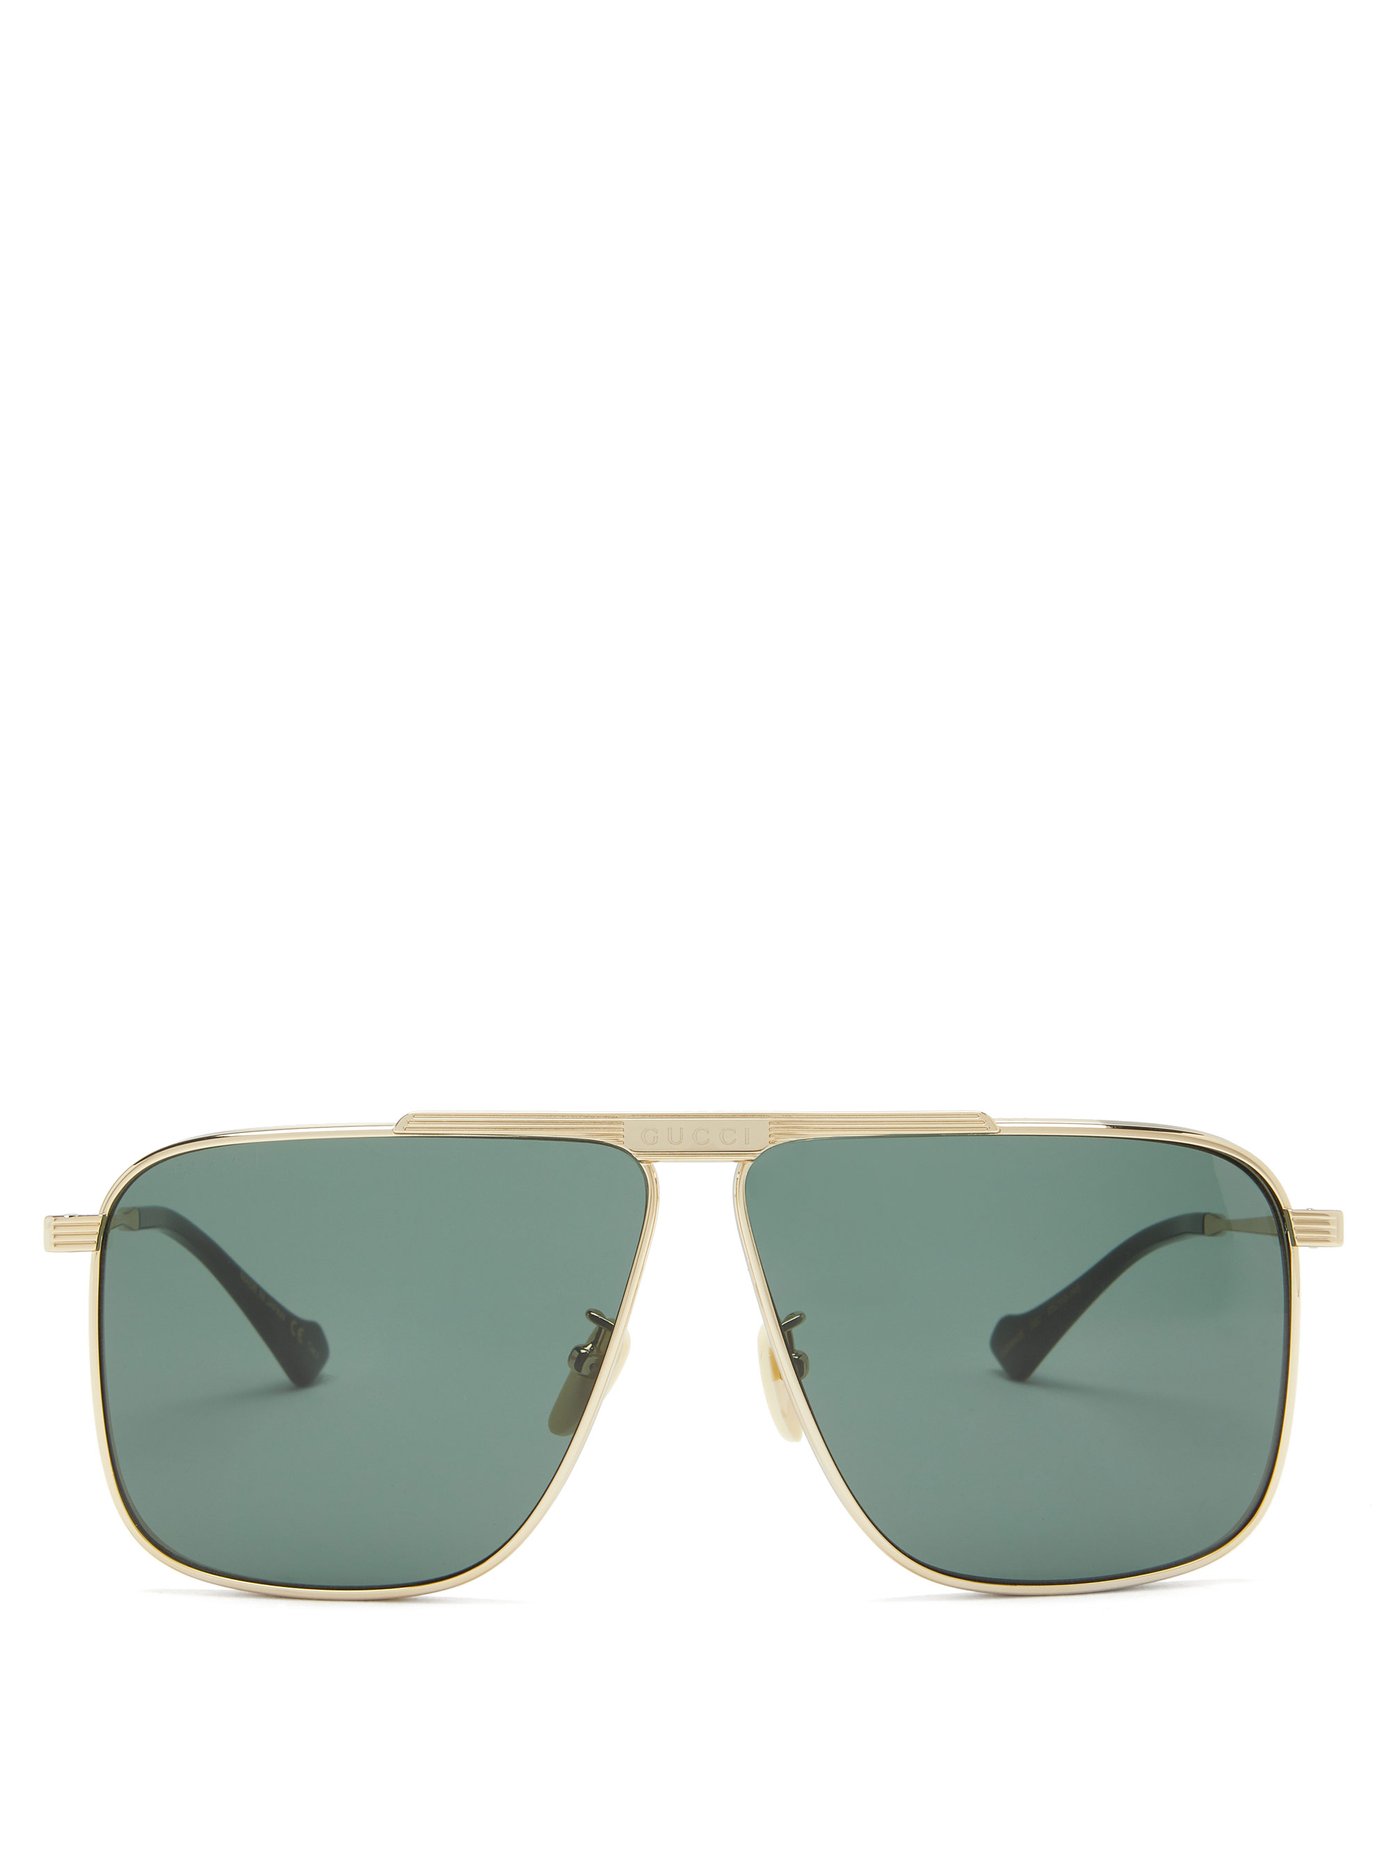 Aviator metal sunglasses | Gucci 